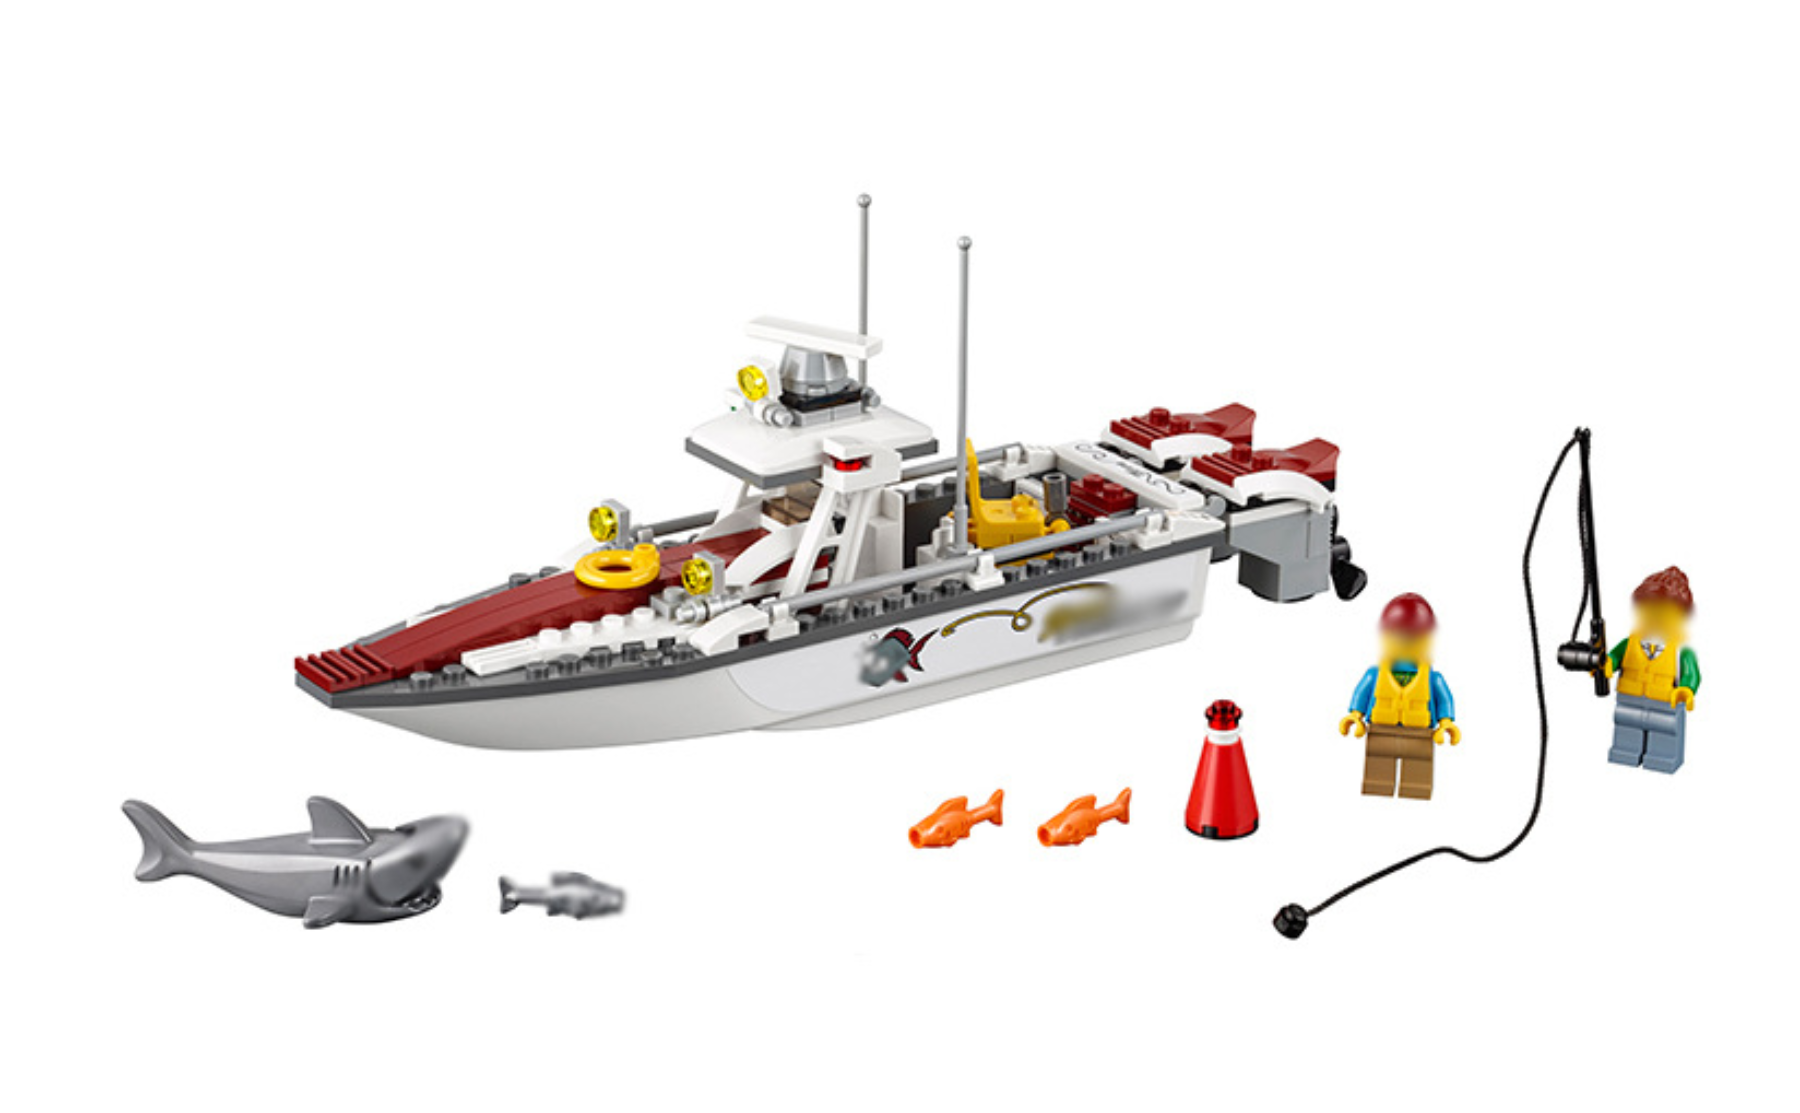 Shark and Fishing Boat Model Building Blocks lego